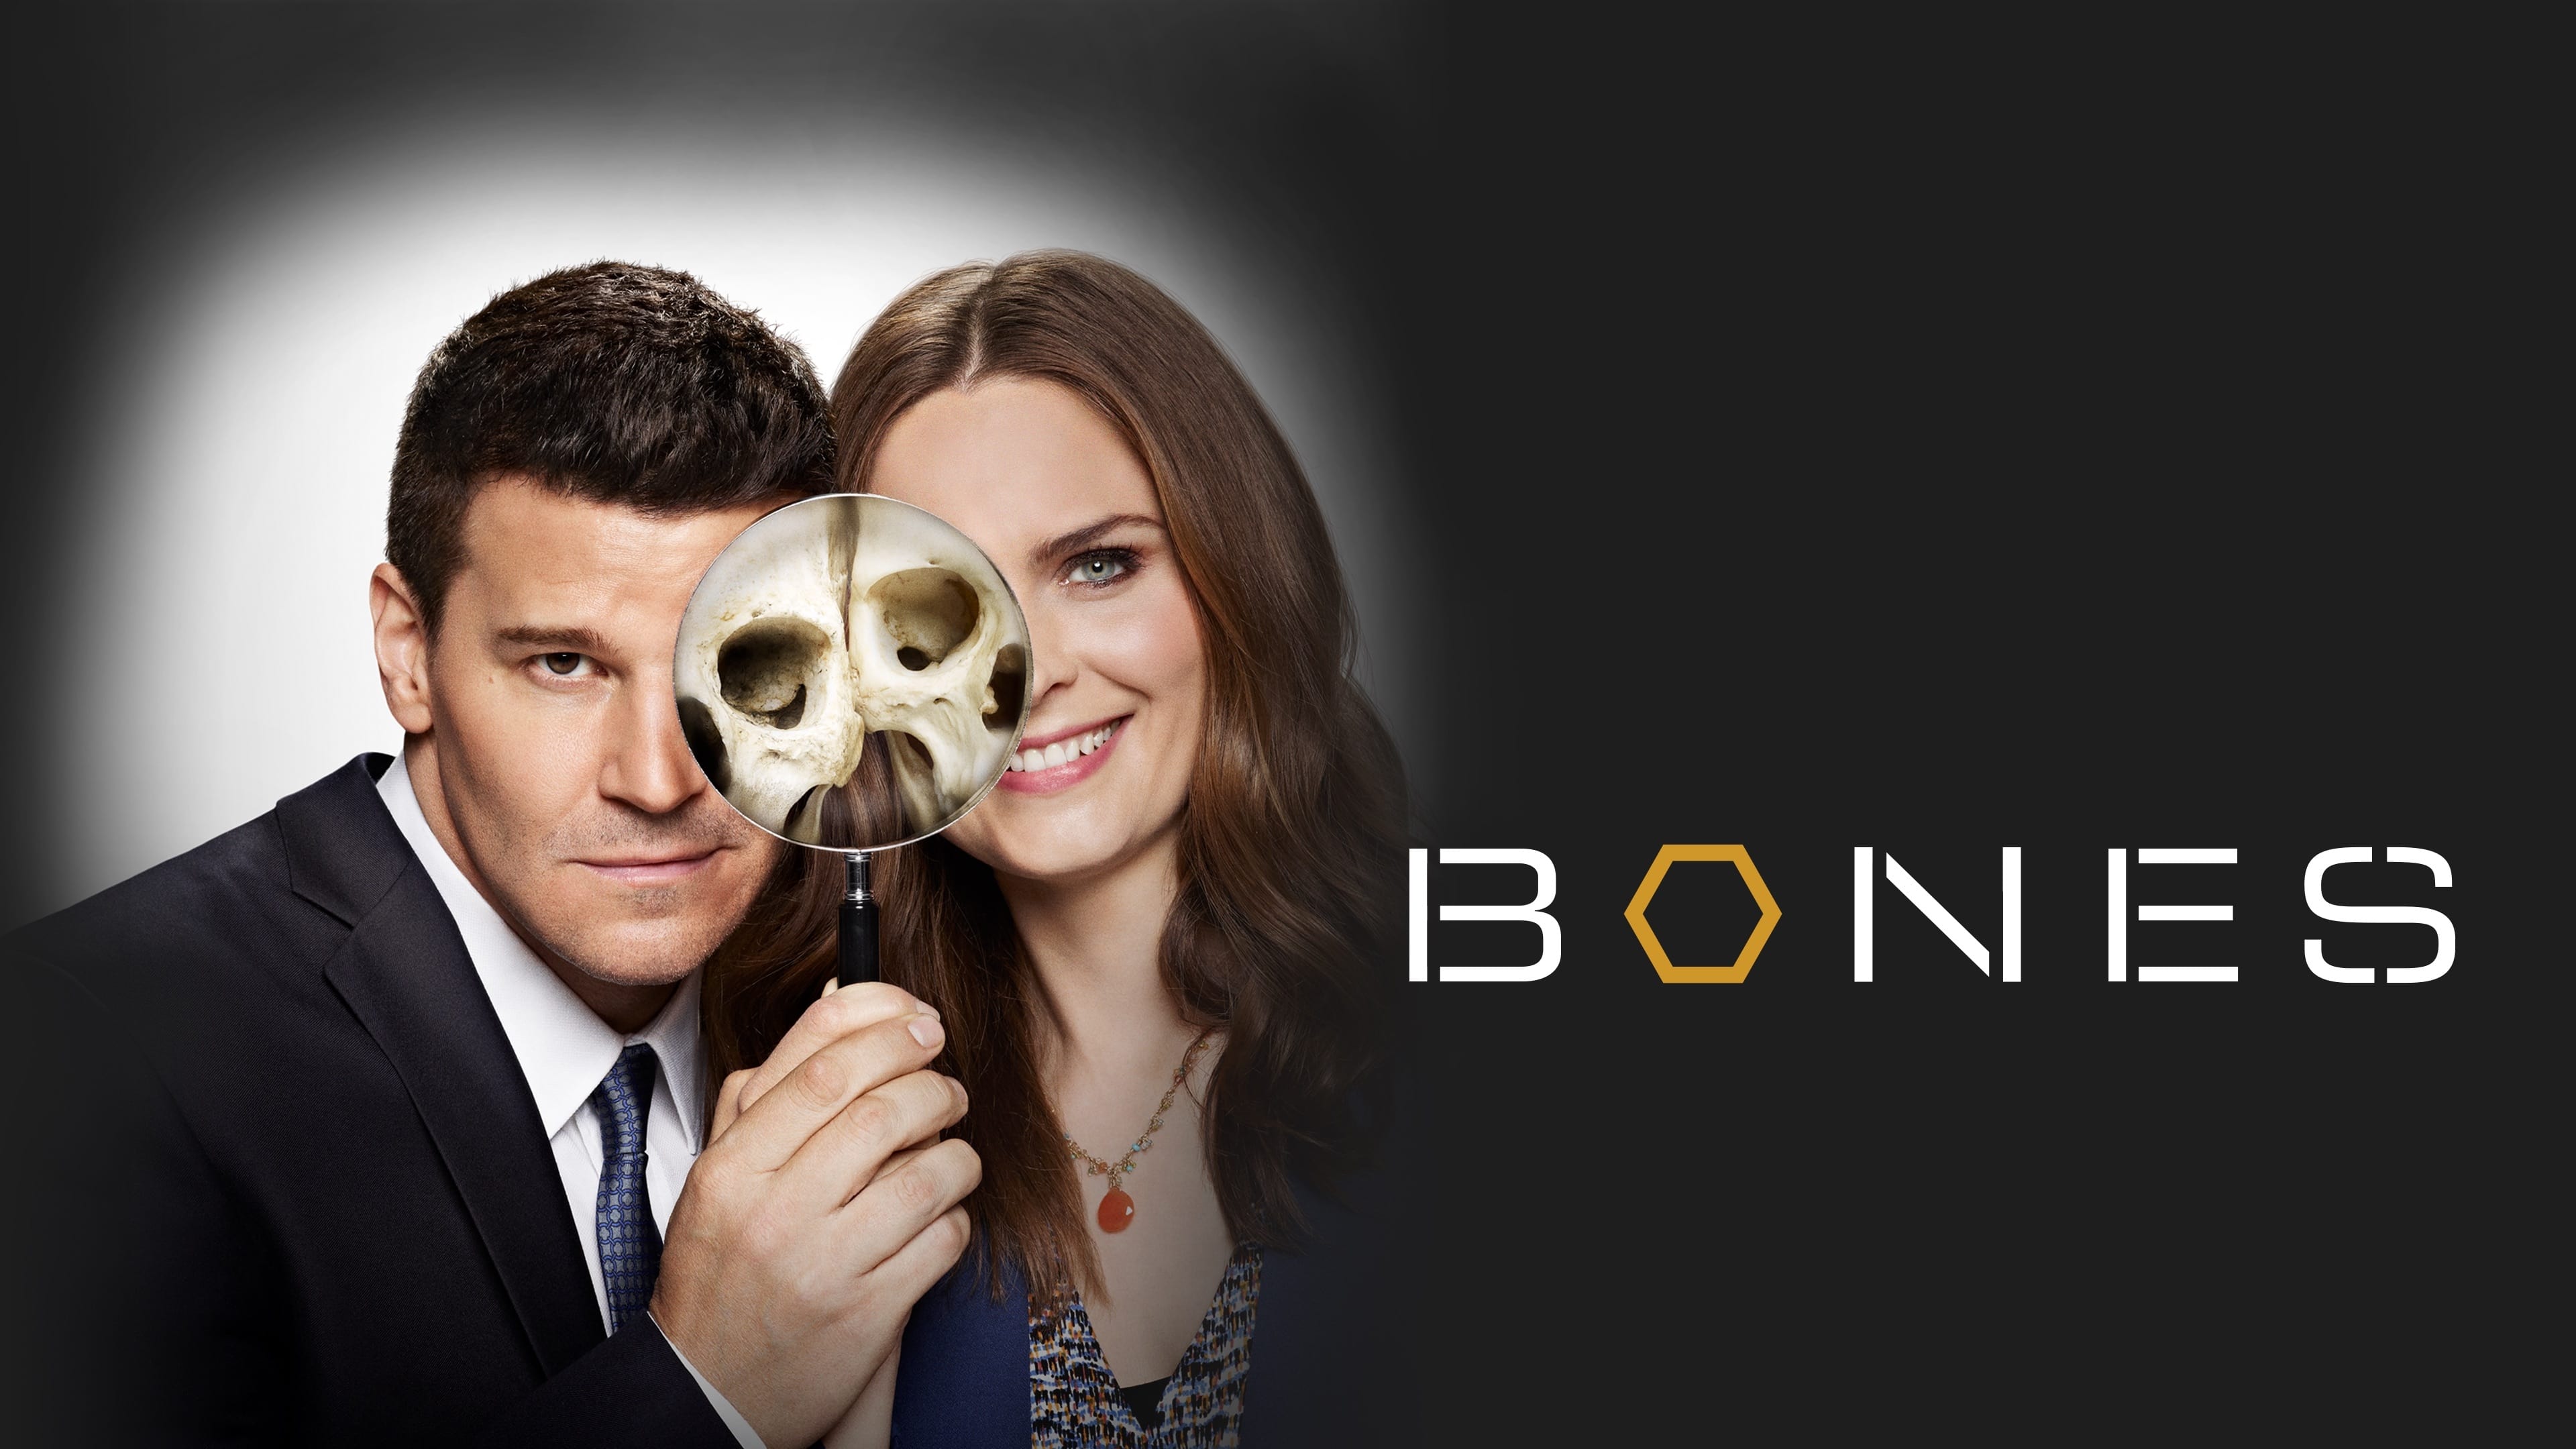 bones season 8 1080p torrent